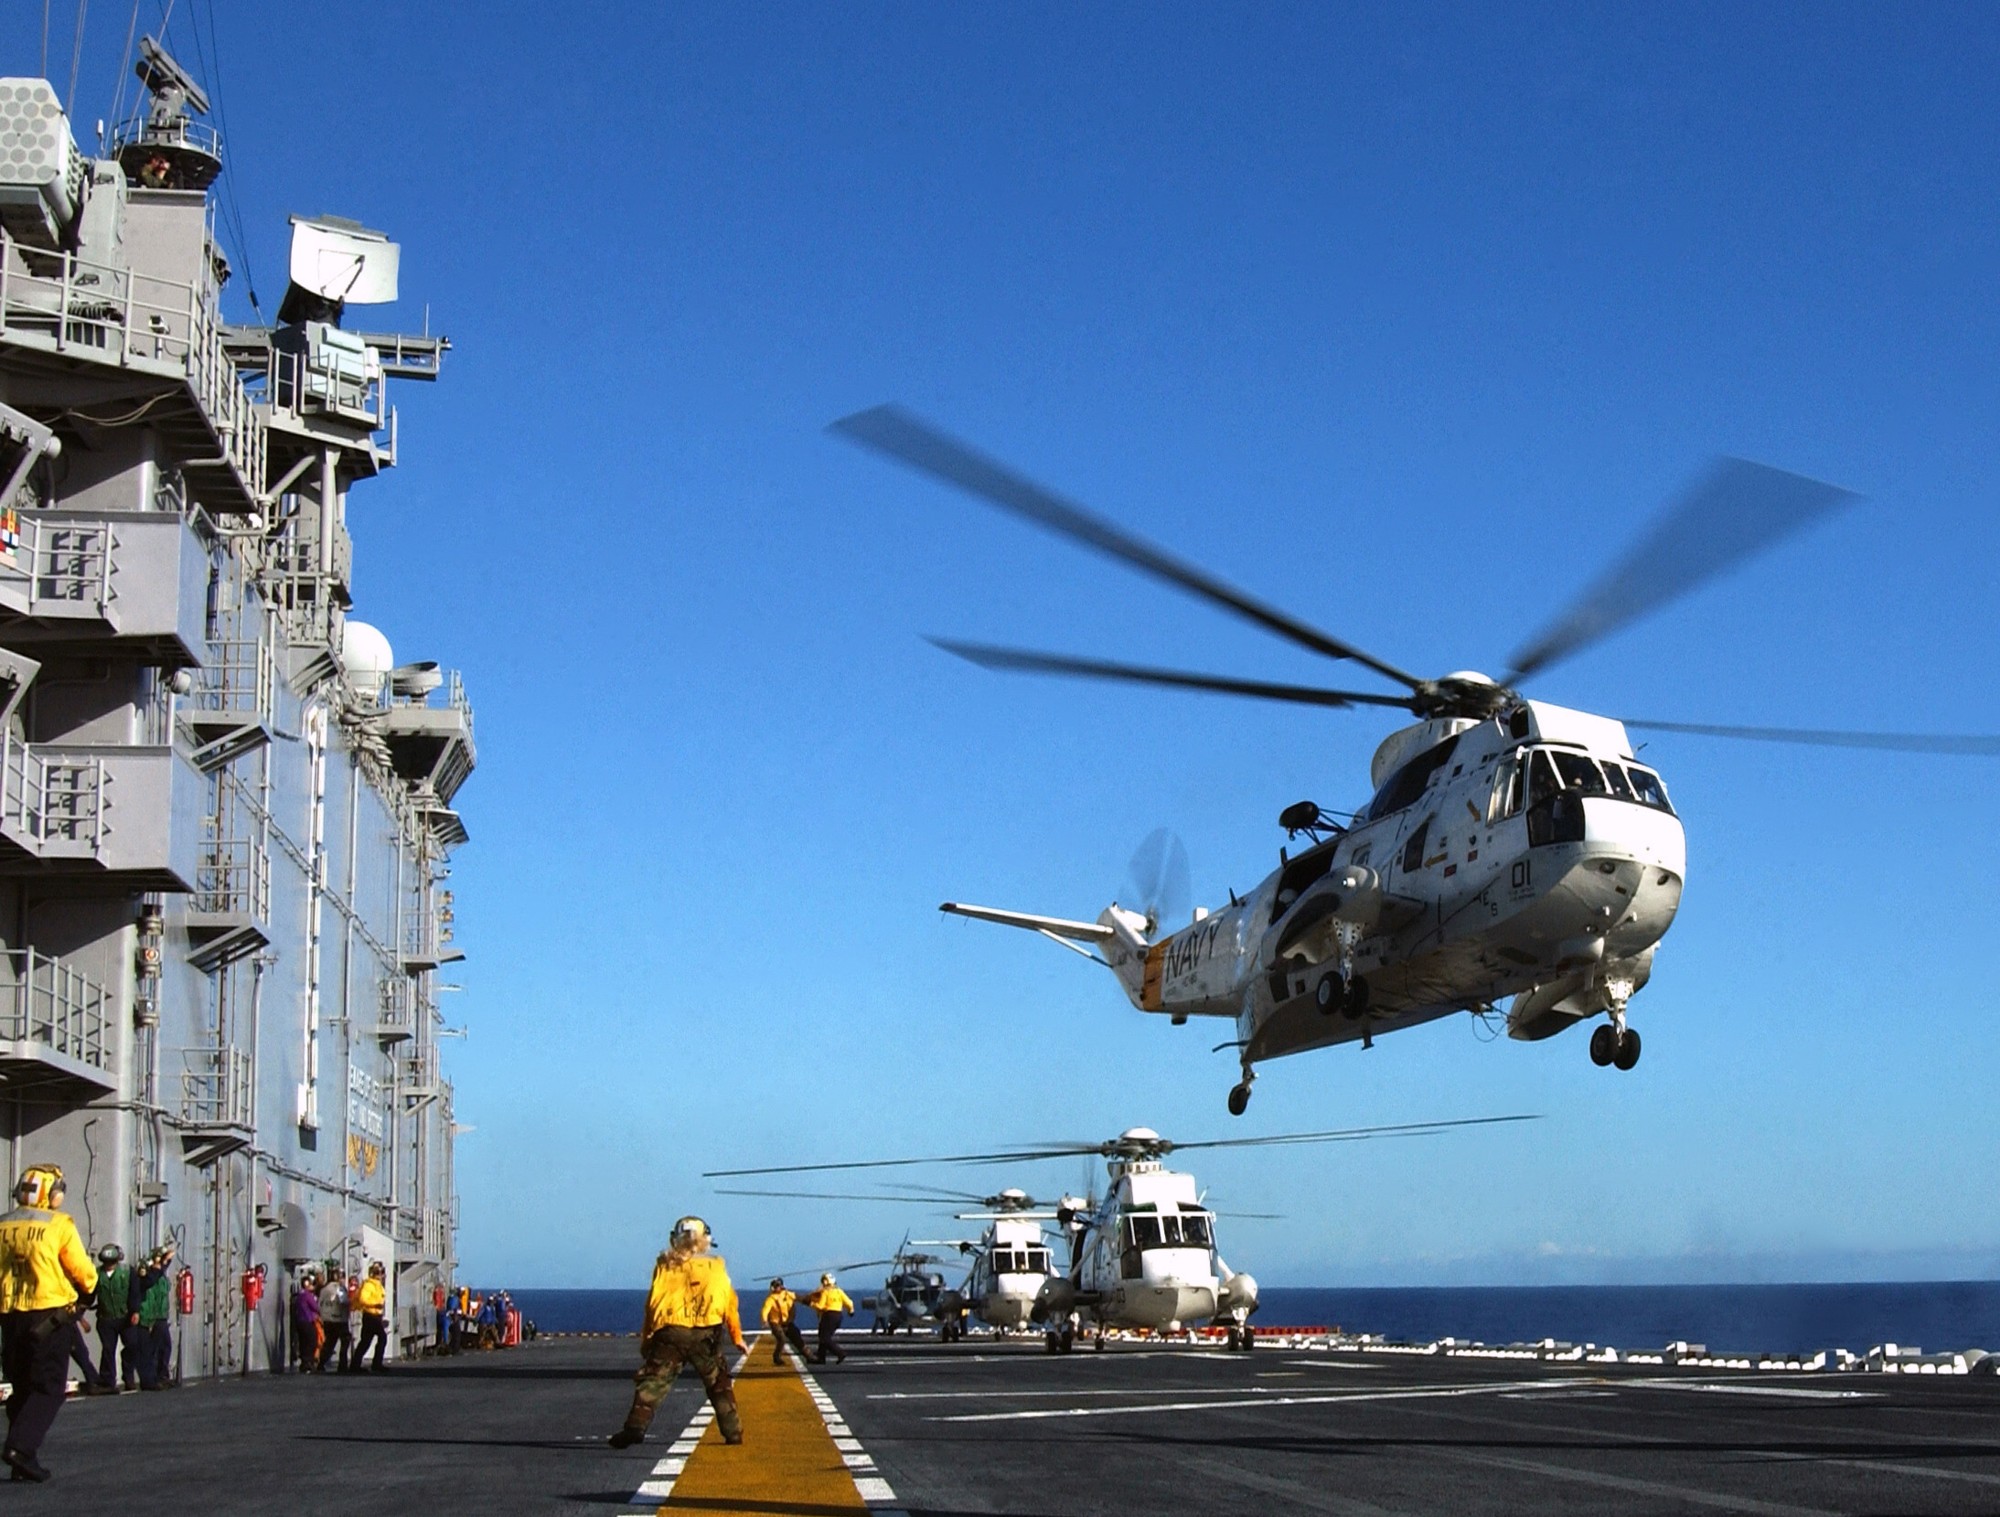 lha-1 uss tarawa amphibious assault ship us navy sh-3 sea king helicopter rimpac 21